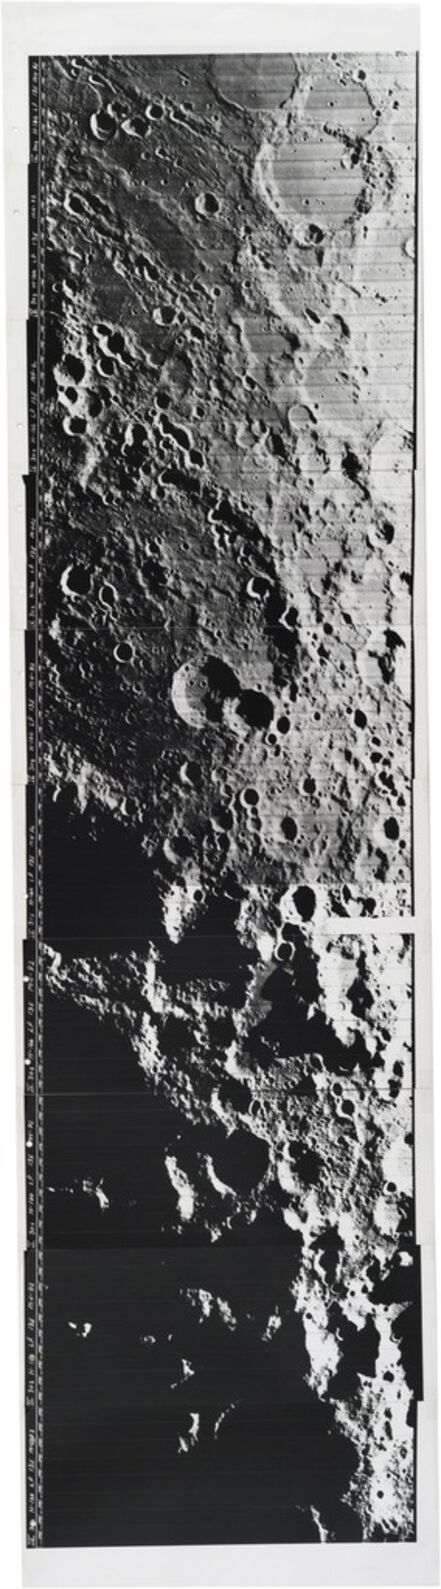 NASA, ‘Orbiter 4 · Lunar Surface’, 1967